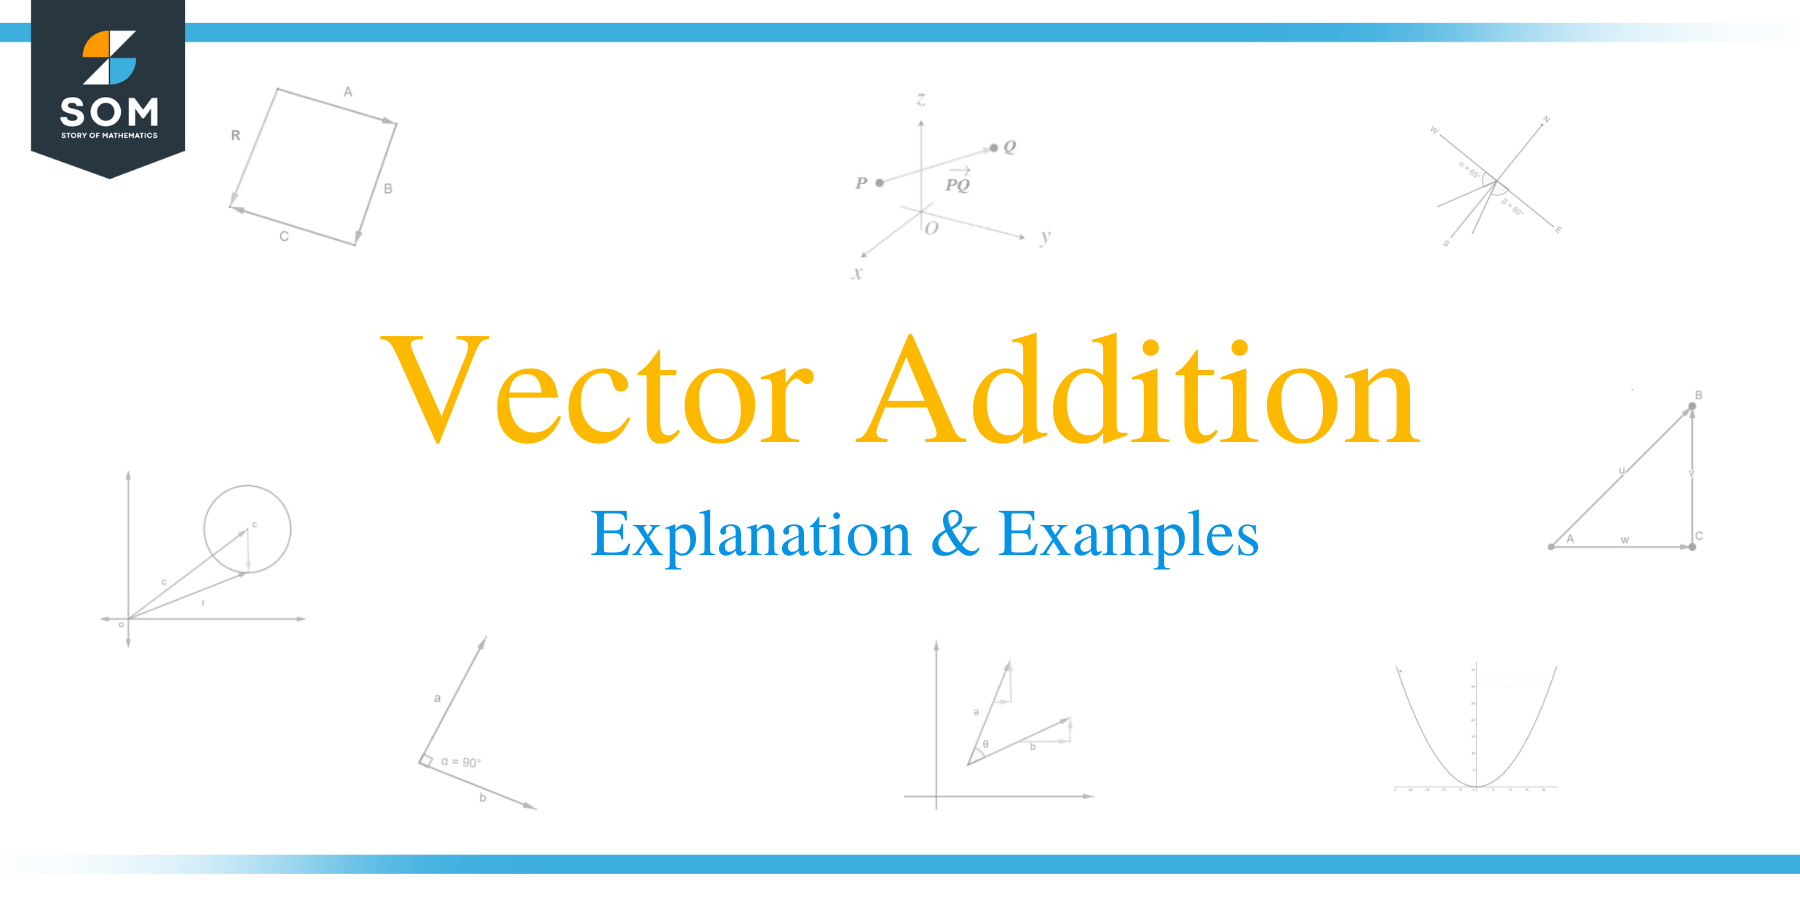 Vector Addition